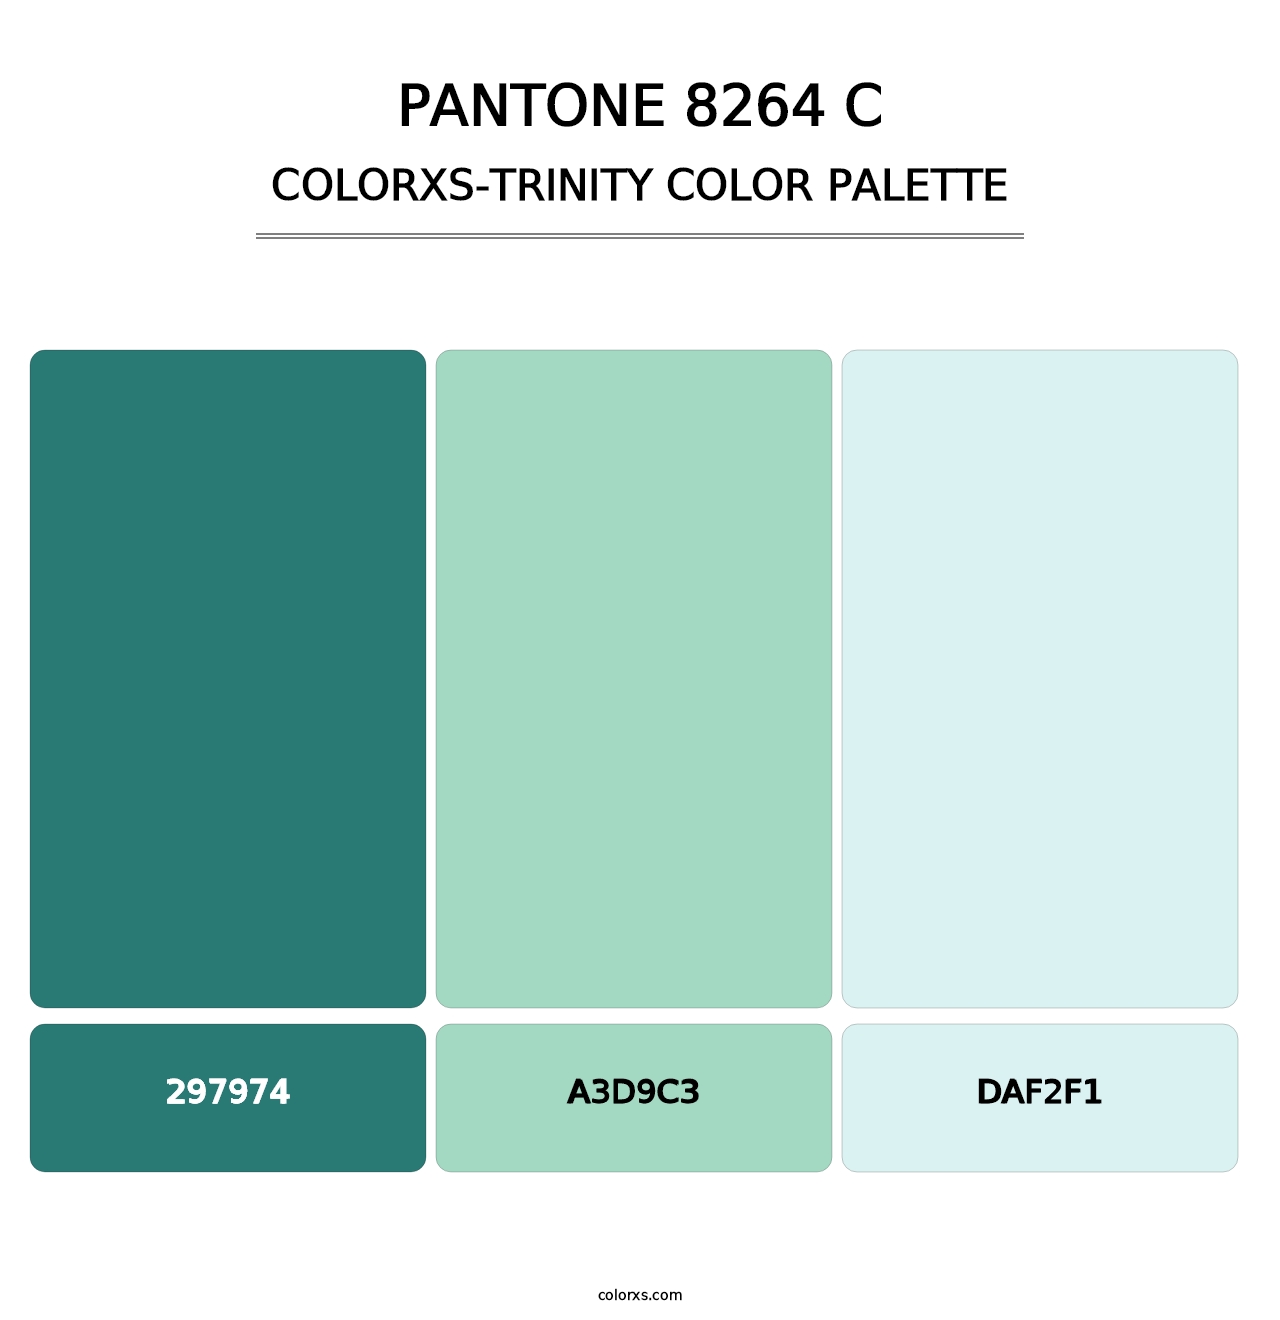 PANTONE 8264 C - Colorxs Trinity Palette